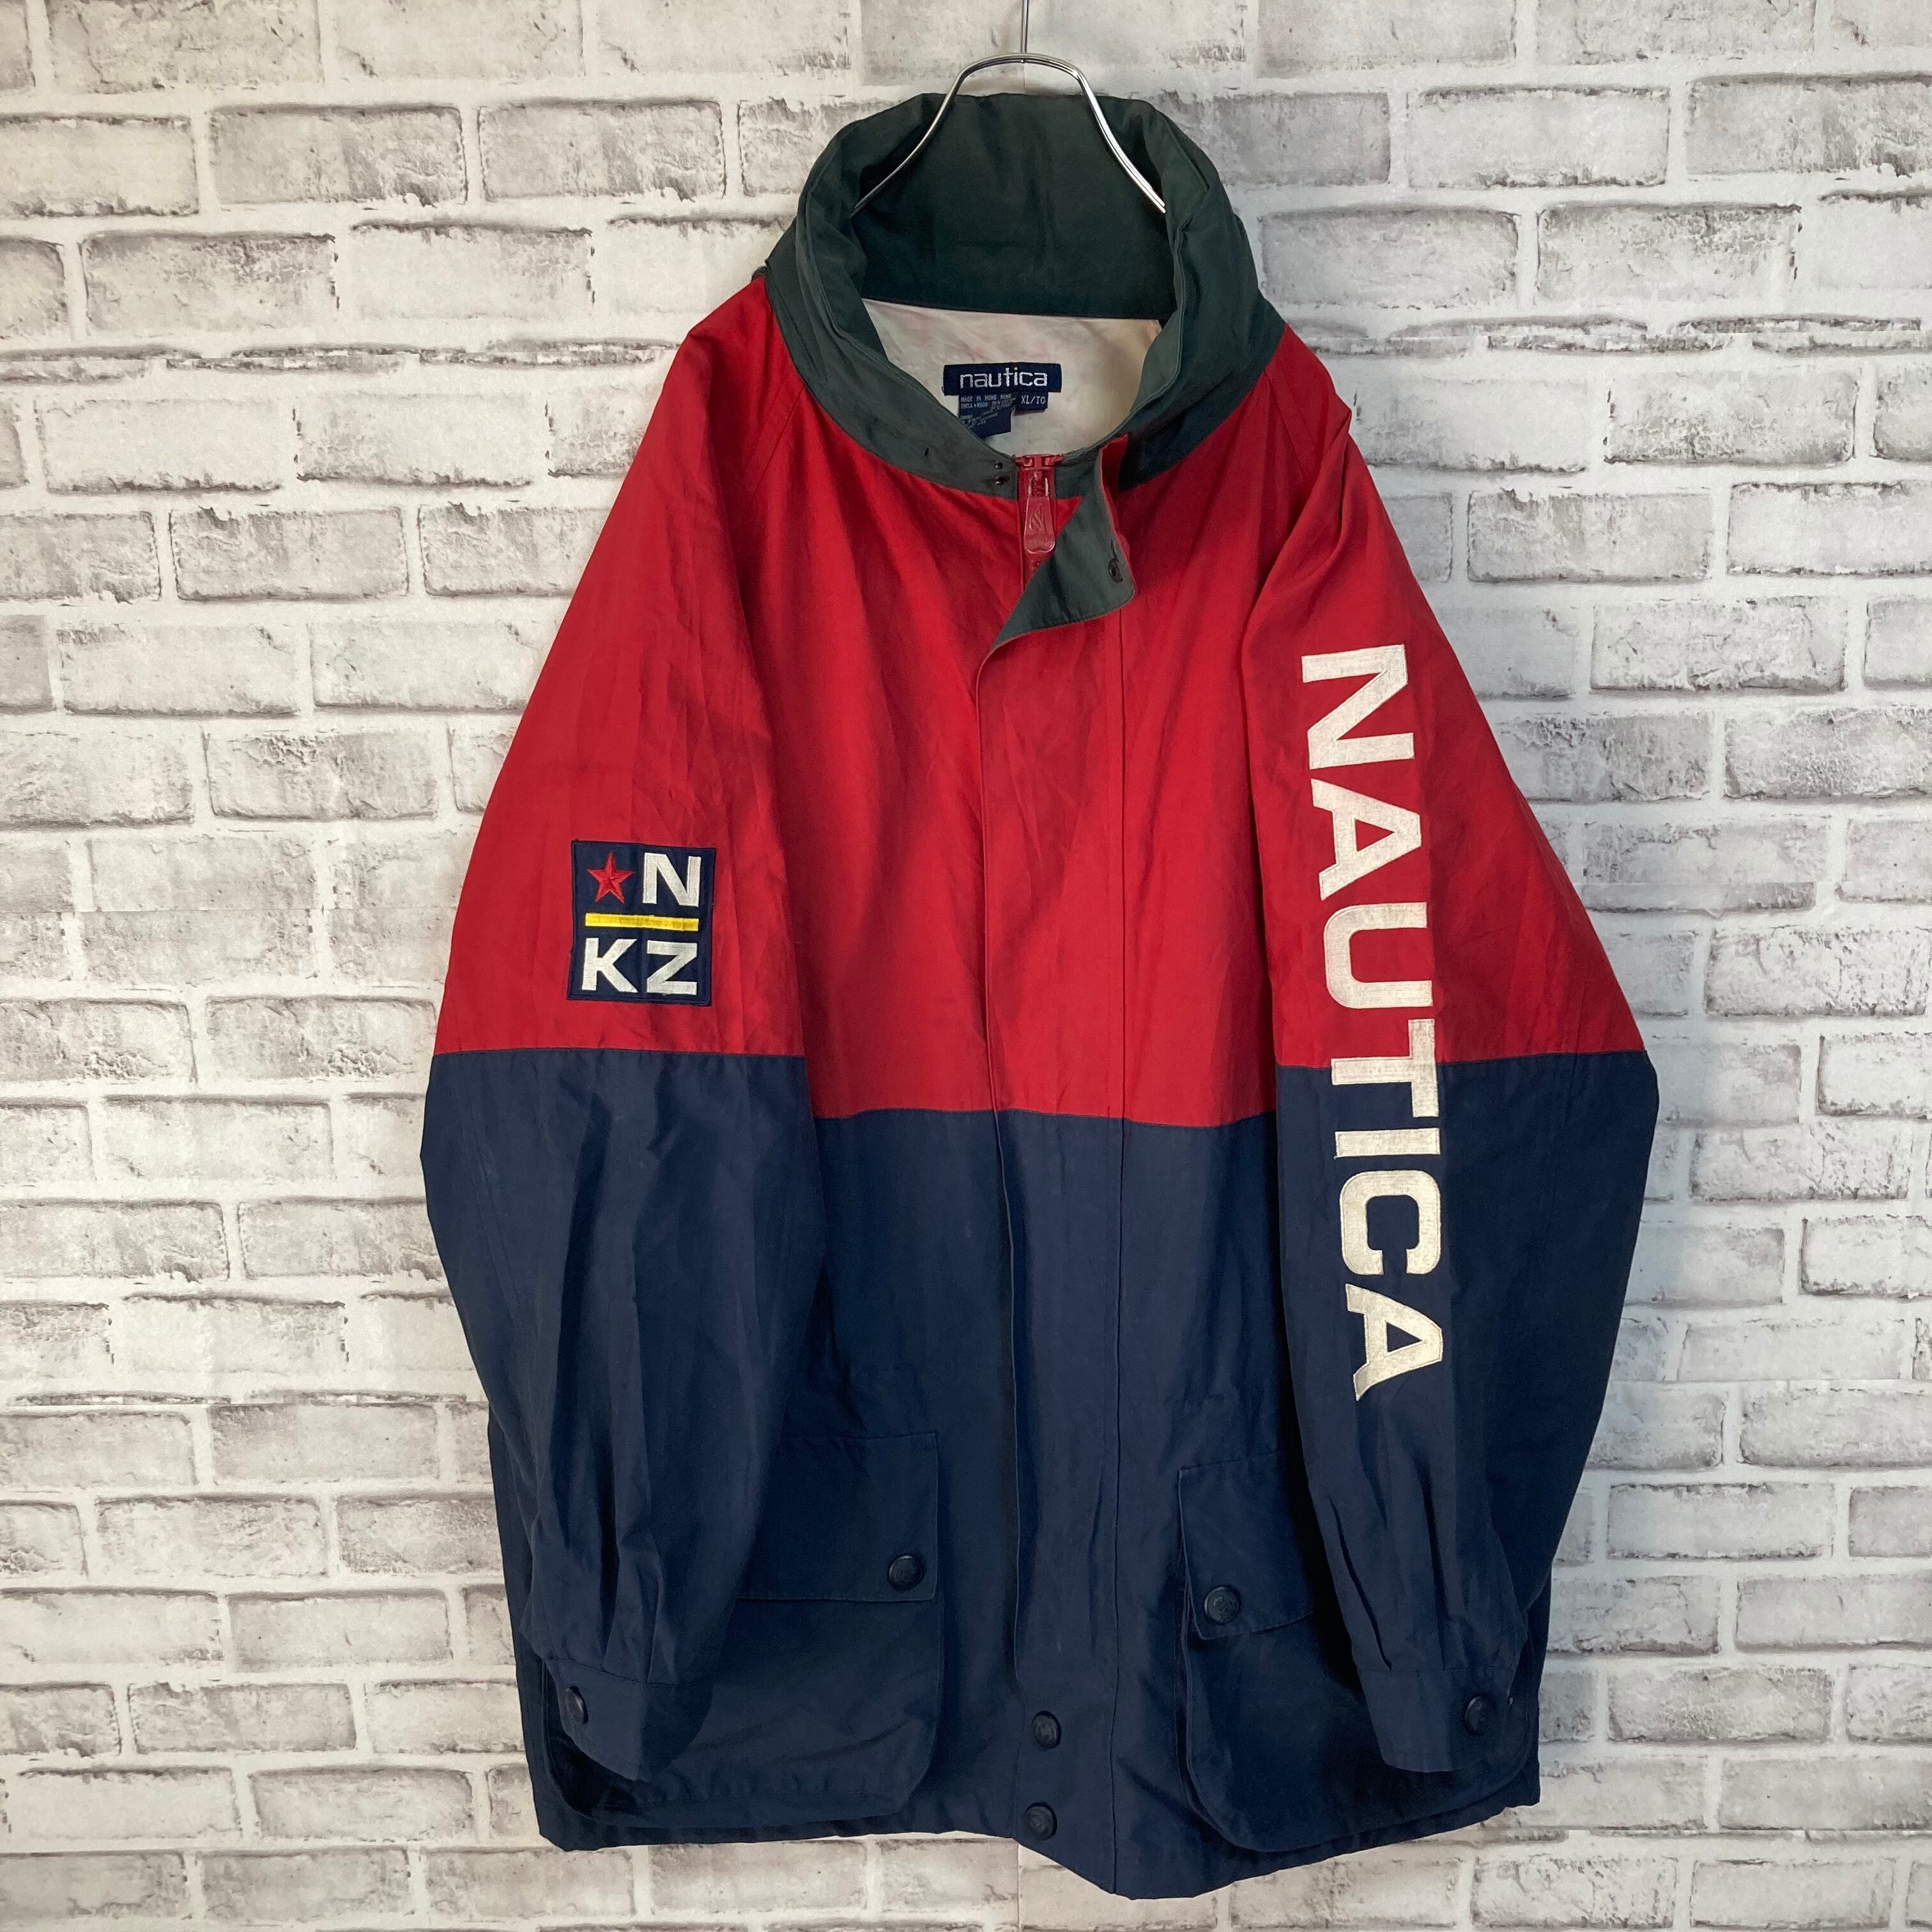 【nautica】Nylon Jacket XL 90s “Old nautica”ノーティカ ナイロン